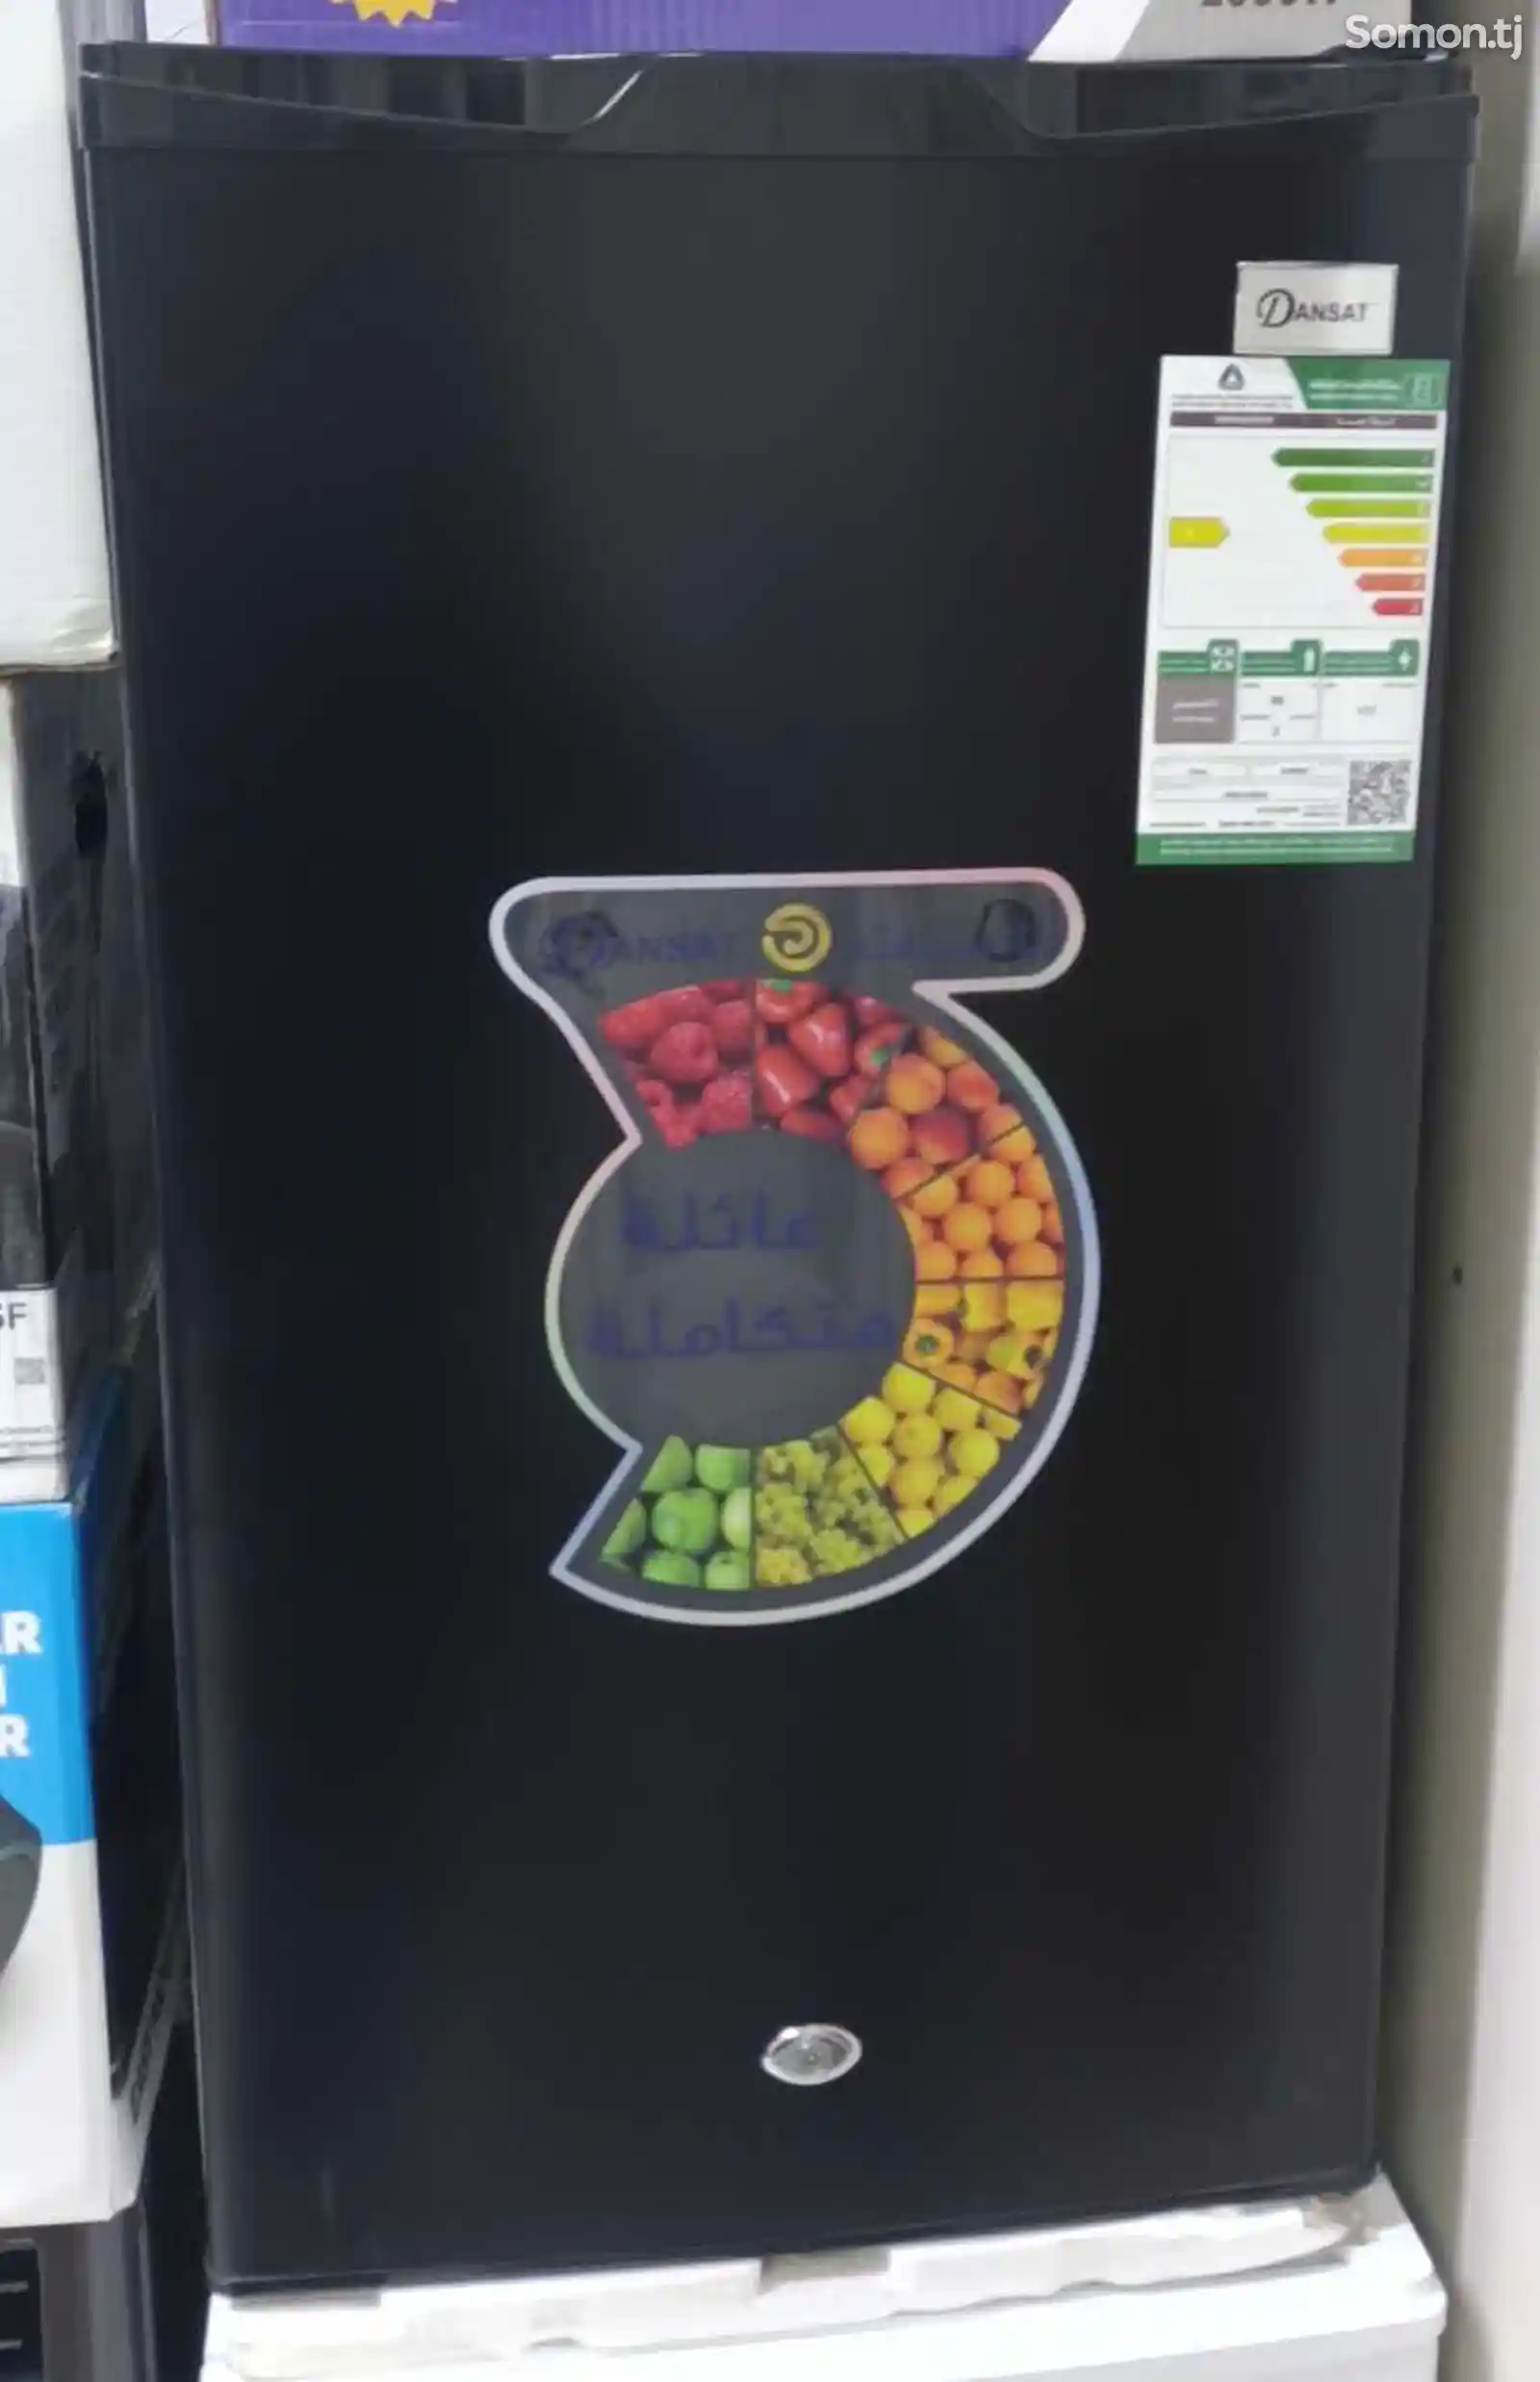 Холодильник Dansat-1